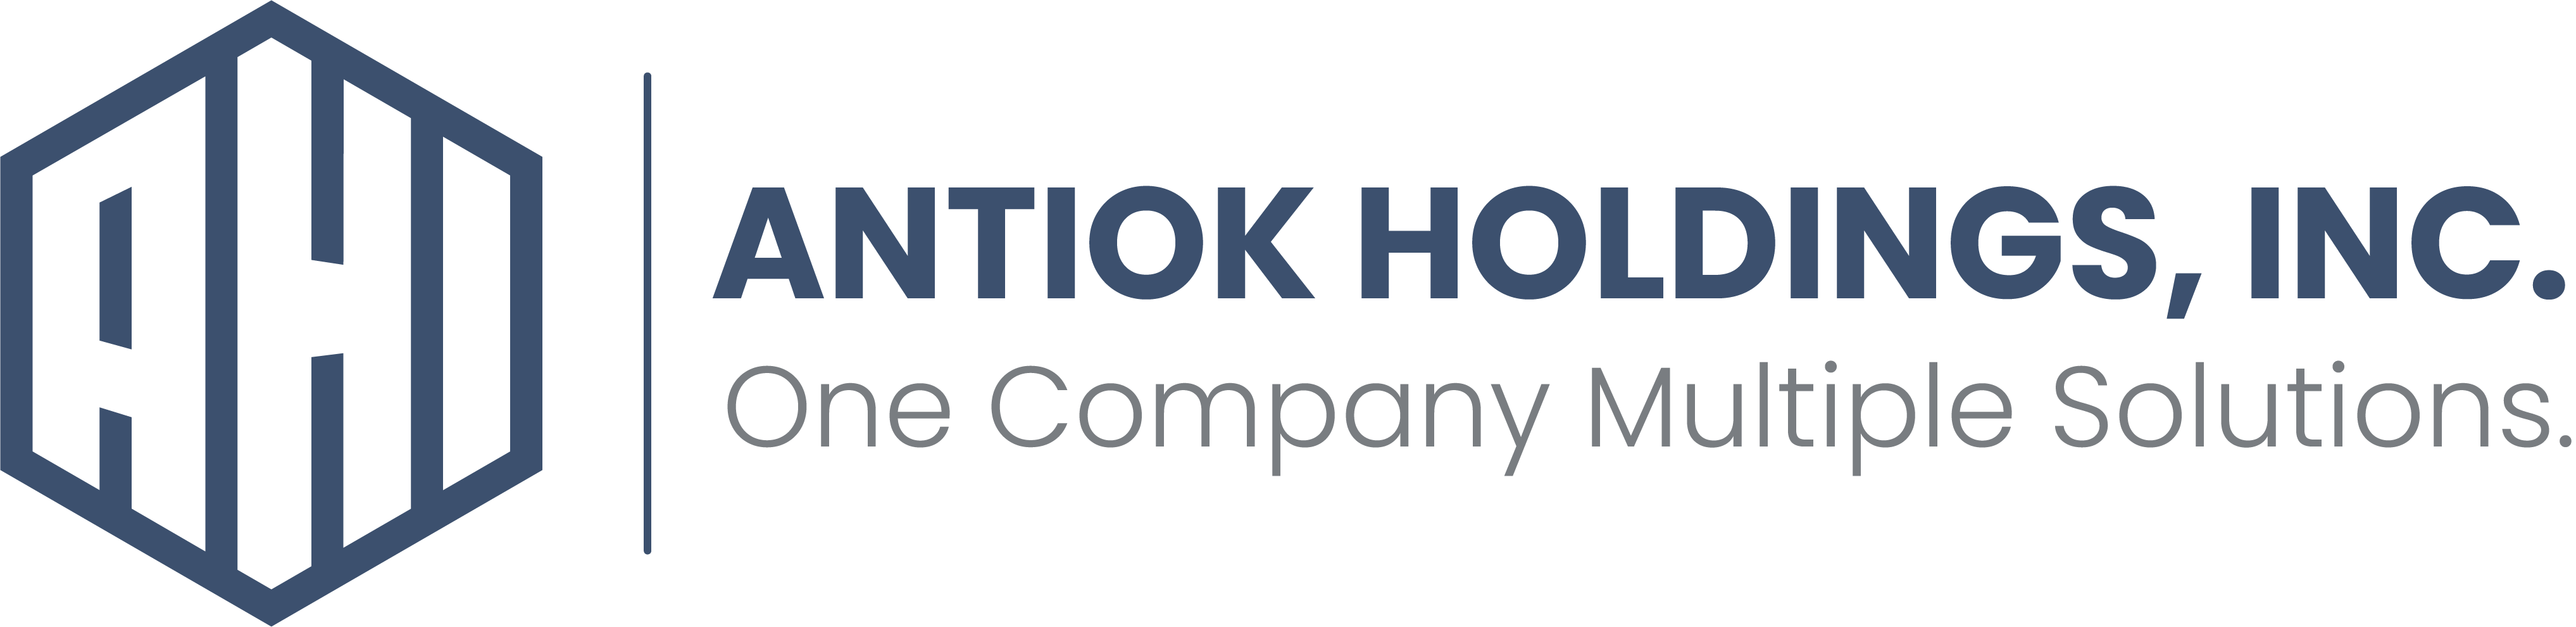 Antiok Holdings, Inc